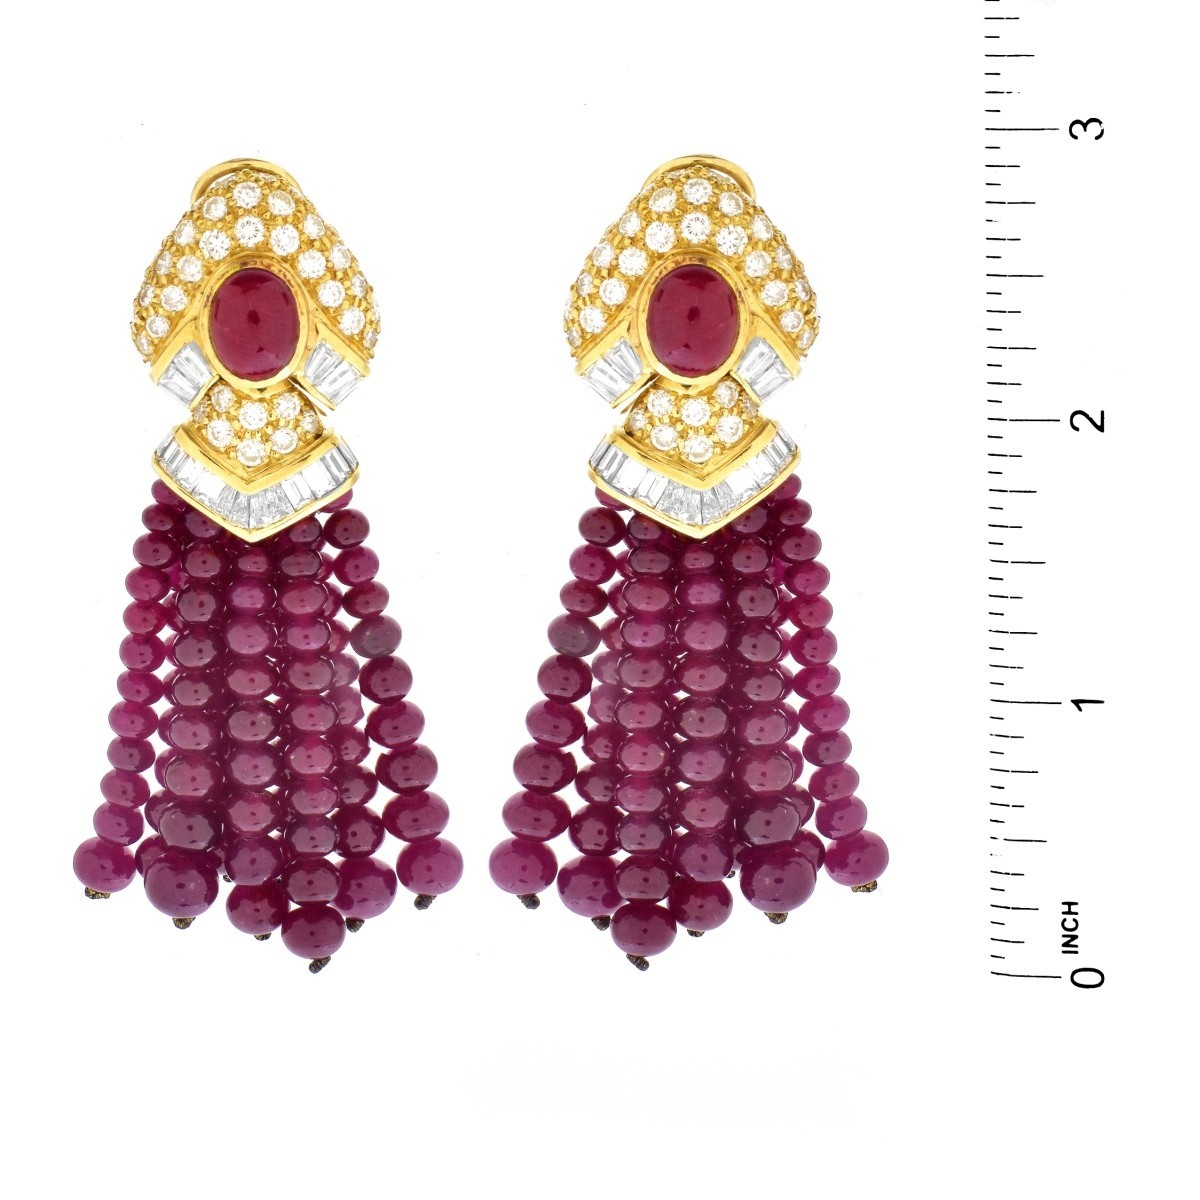 Burma Ruby, Diamond and 18K Earrings